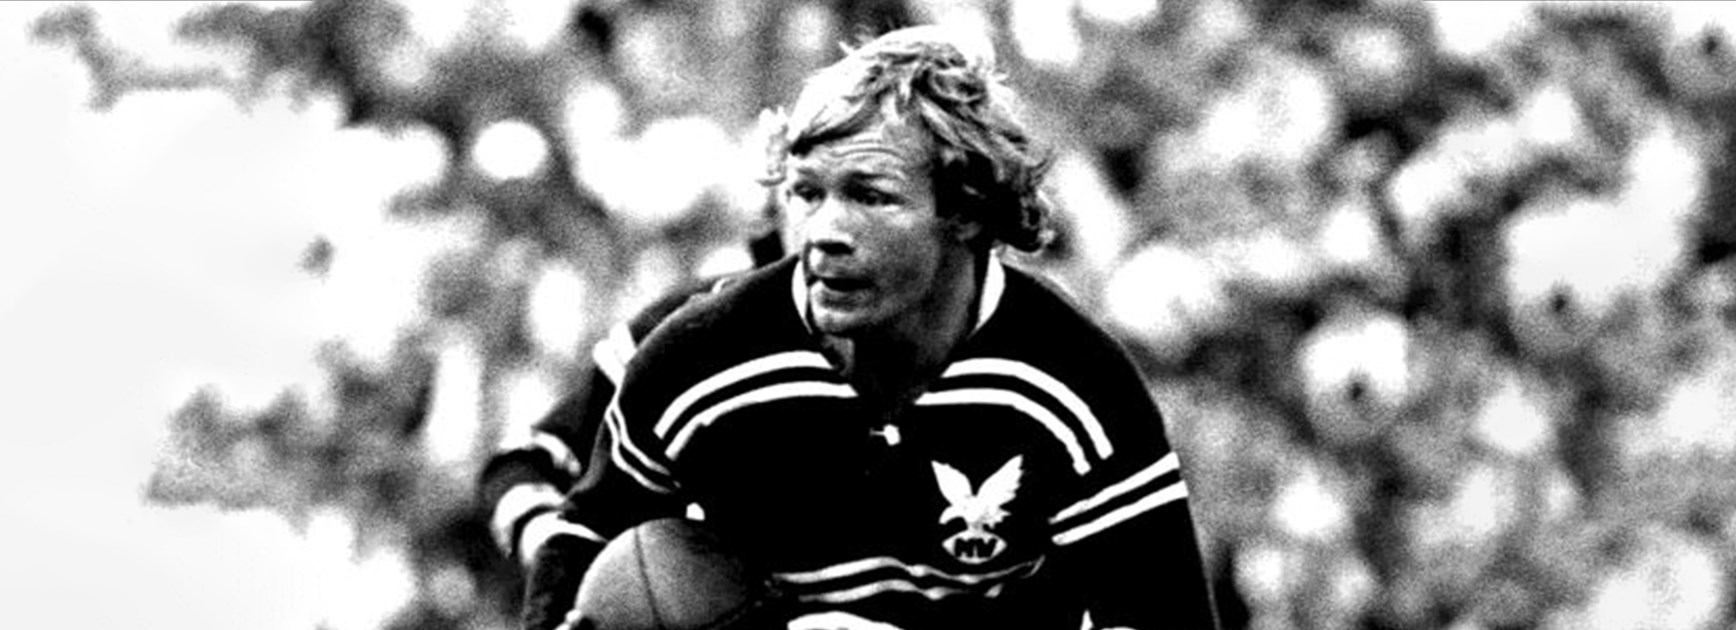 Sea Eagles mourn the passing of Bob Fulton